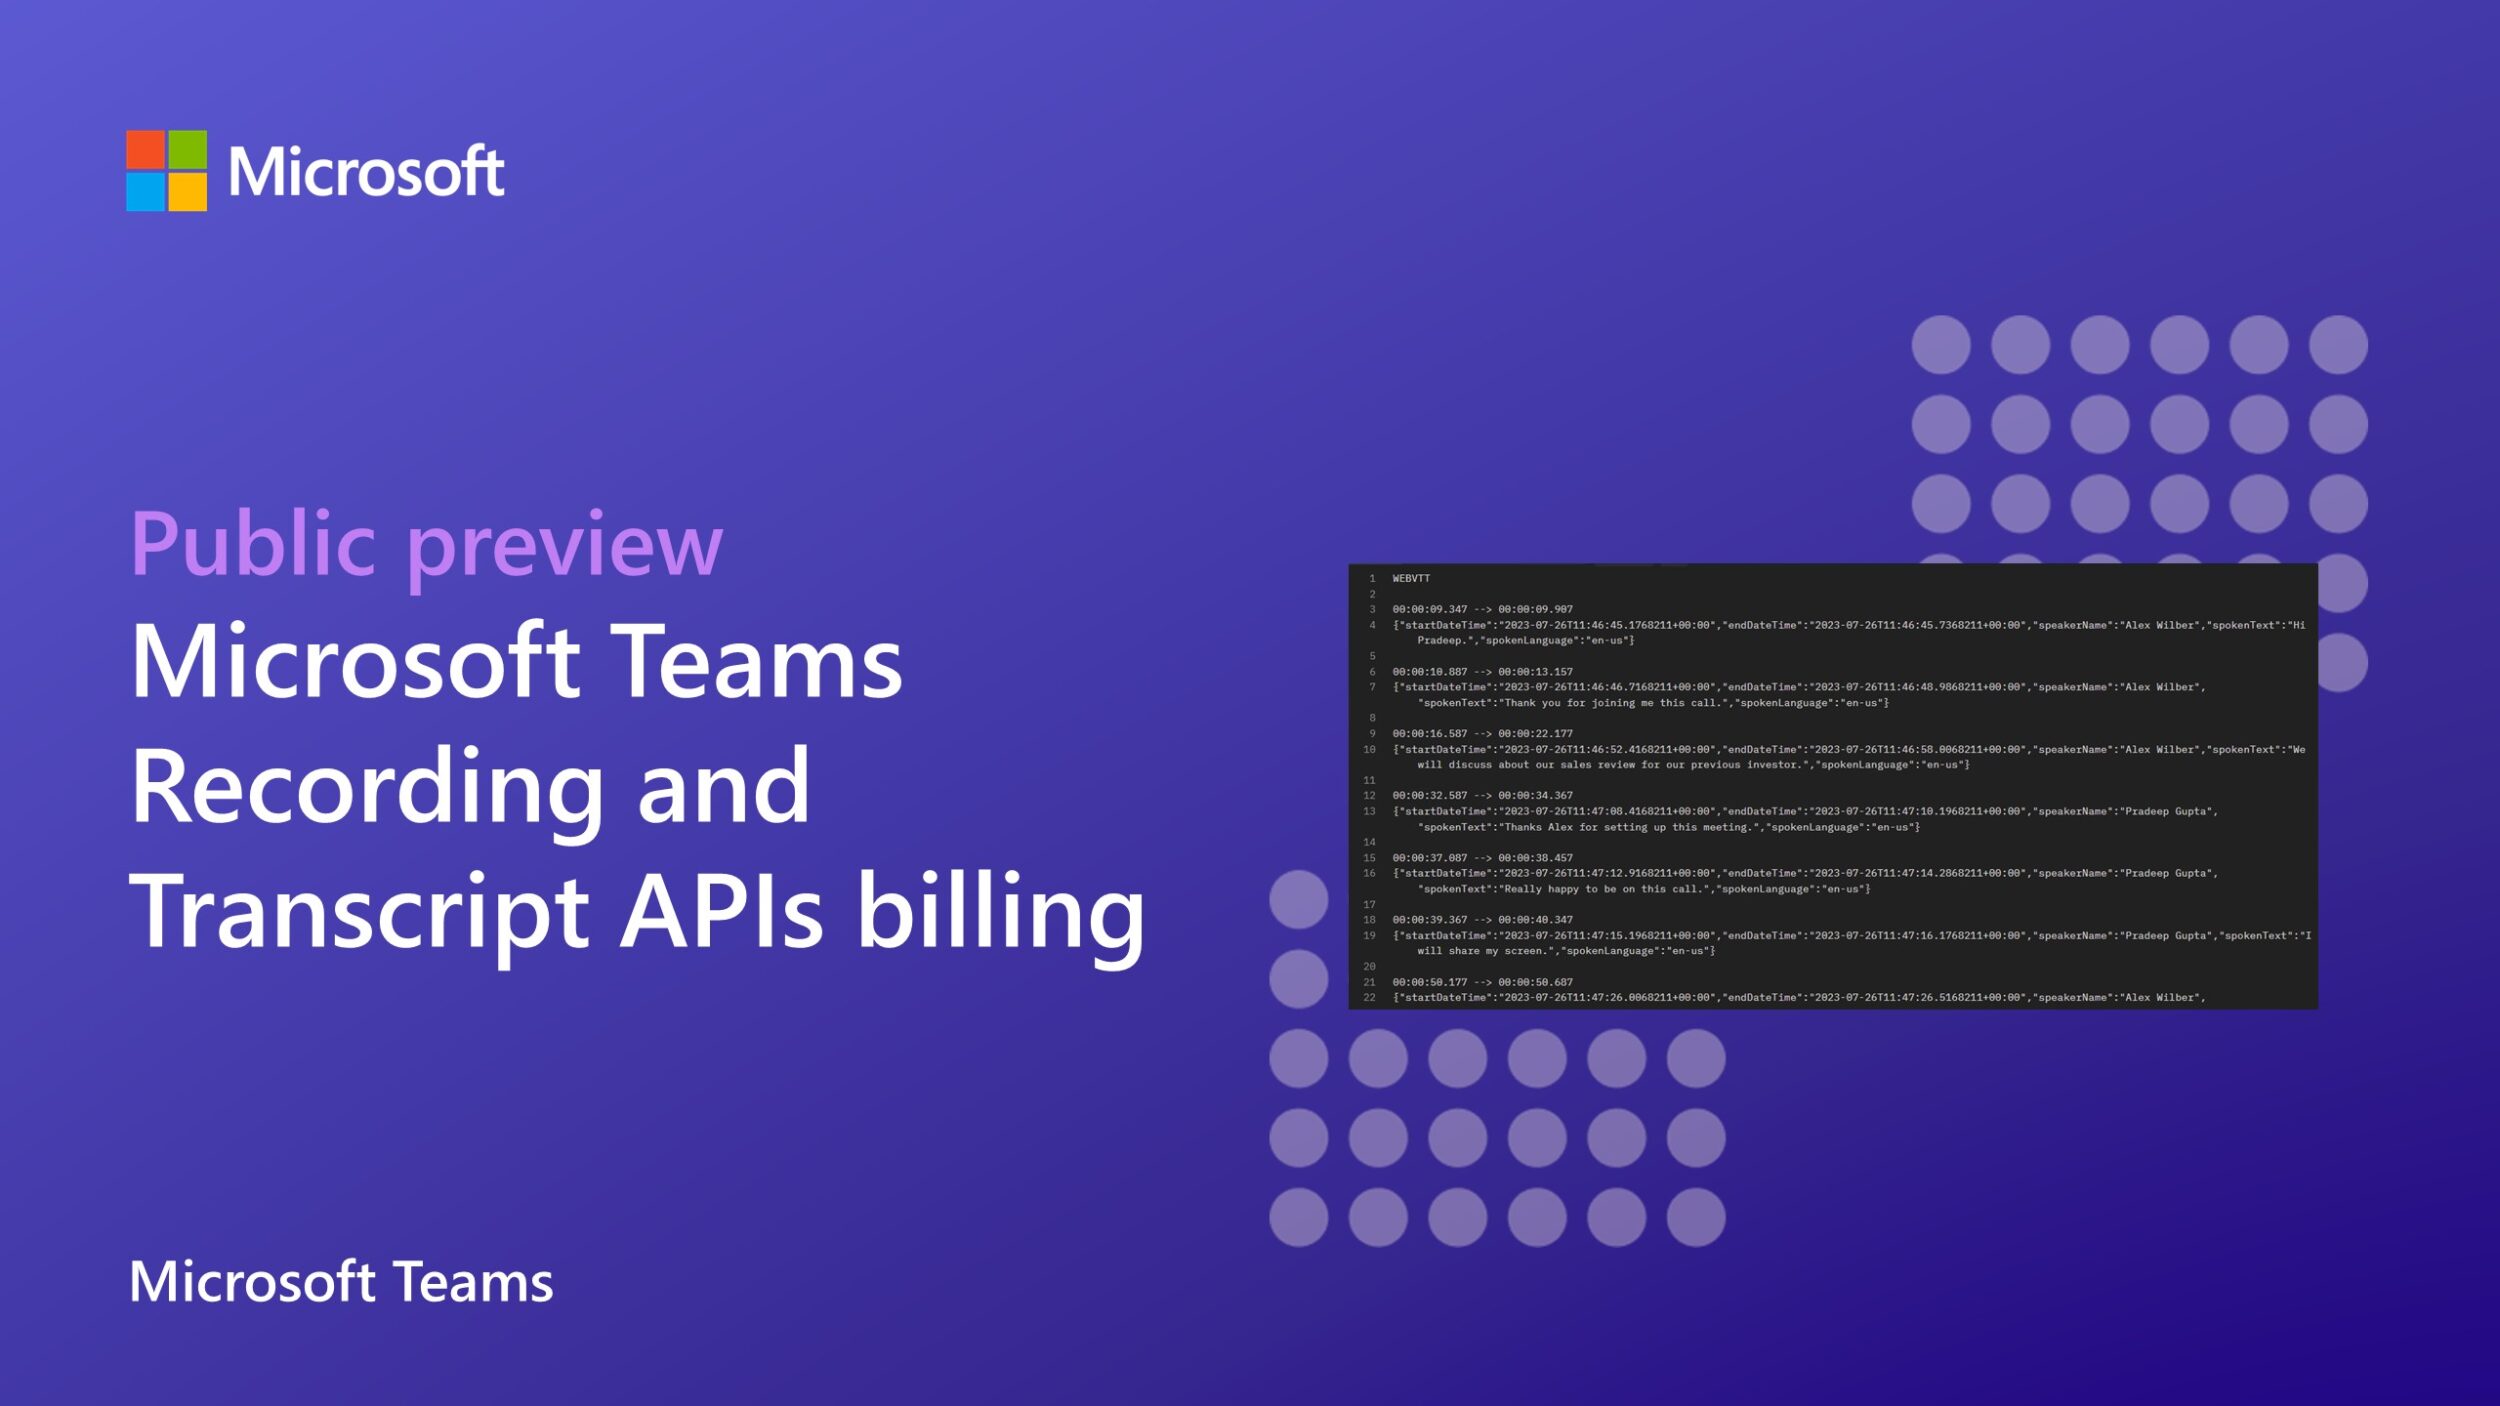 Microsoft Teams Recording and Transcript APIs billing in public preview